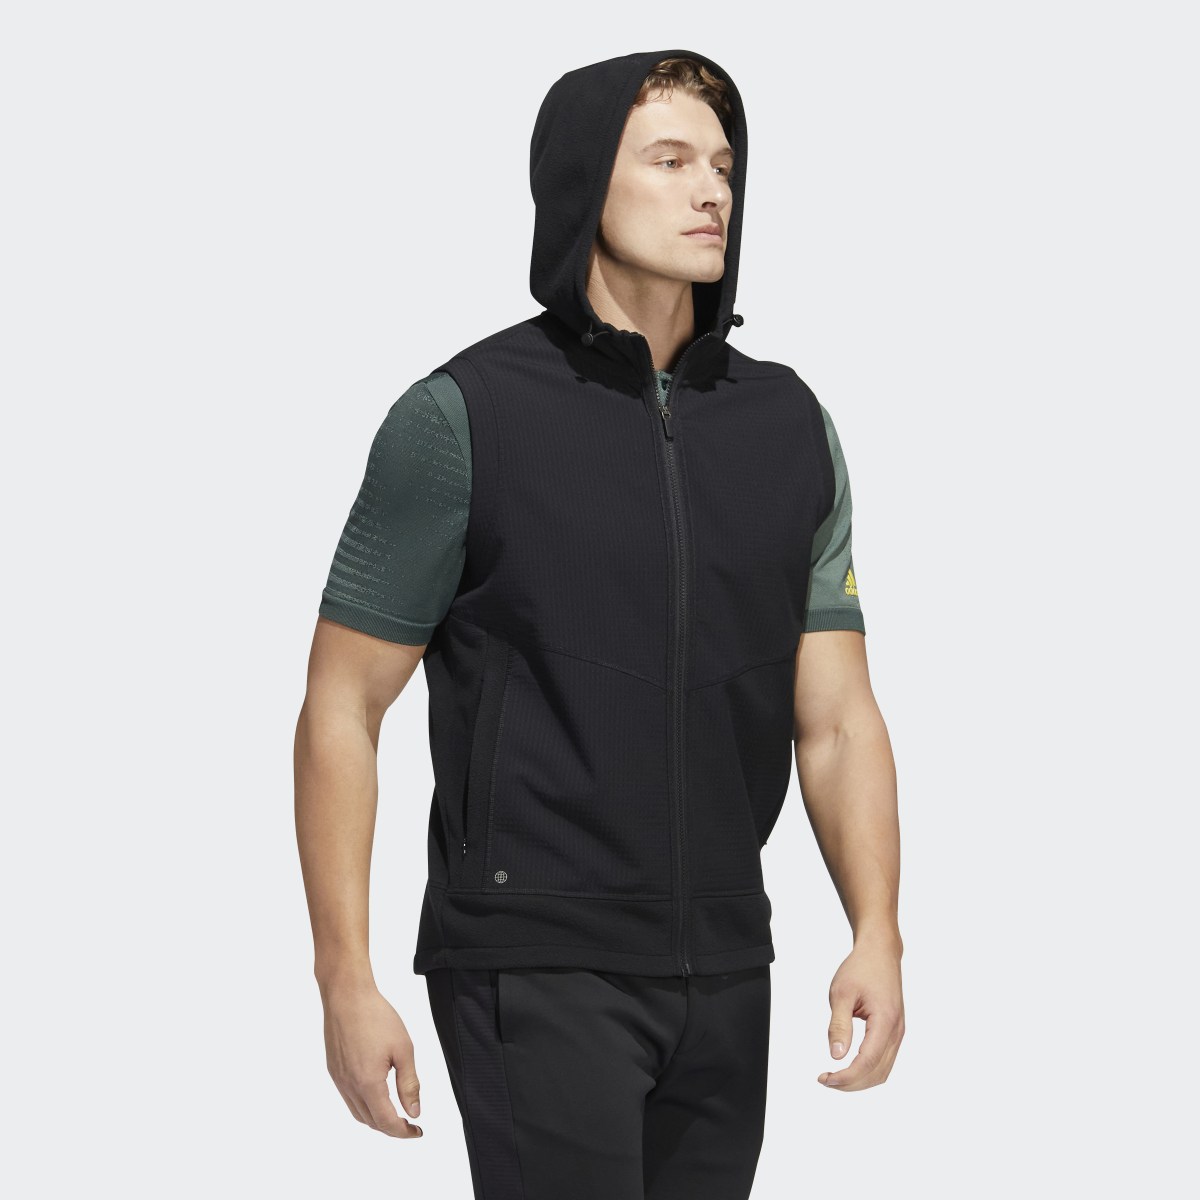 Adidas Statement Full-Zip Hooded Golf Vest. 5